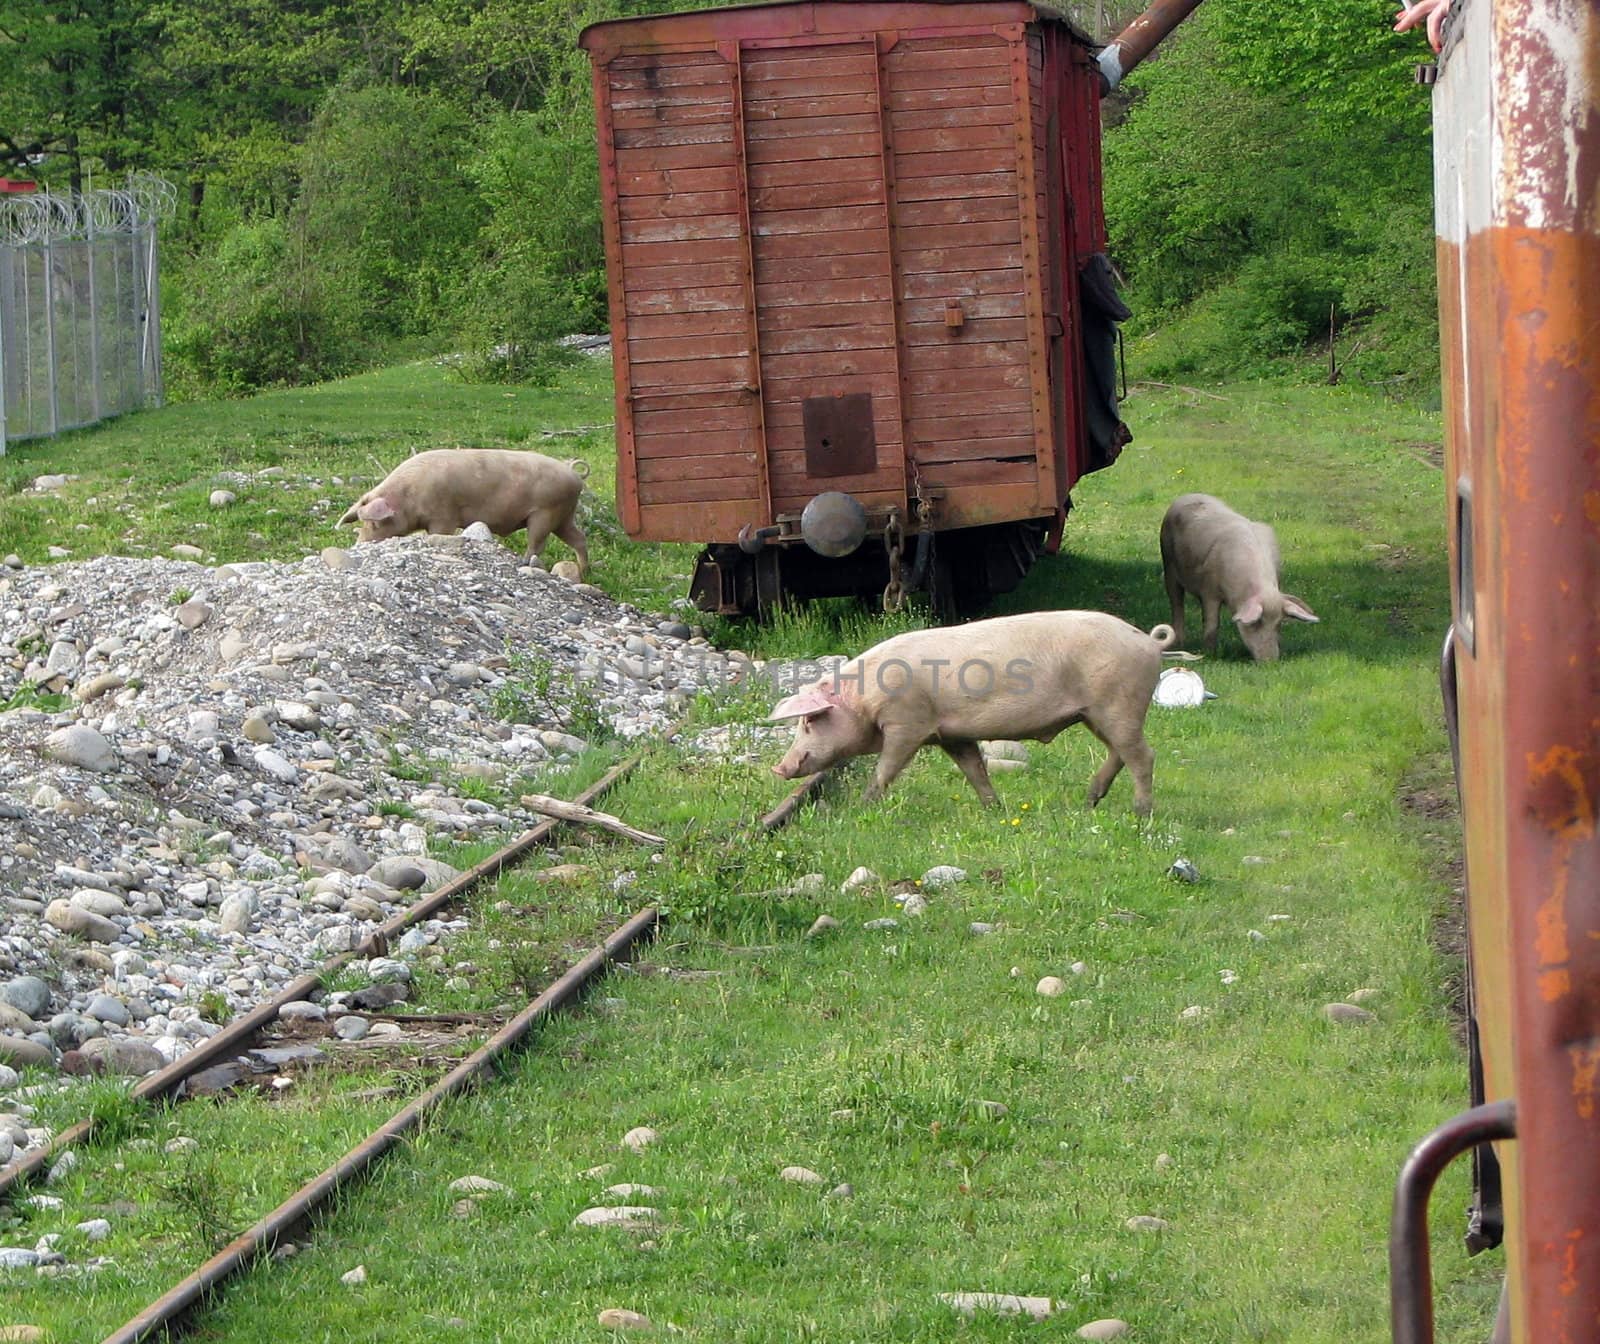 Pigs on the railway tracks by cynos_spb